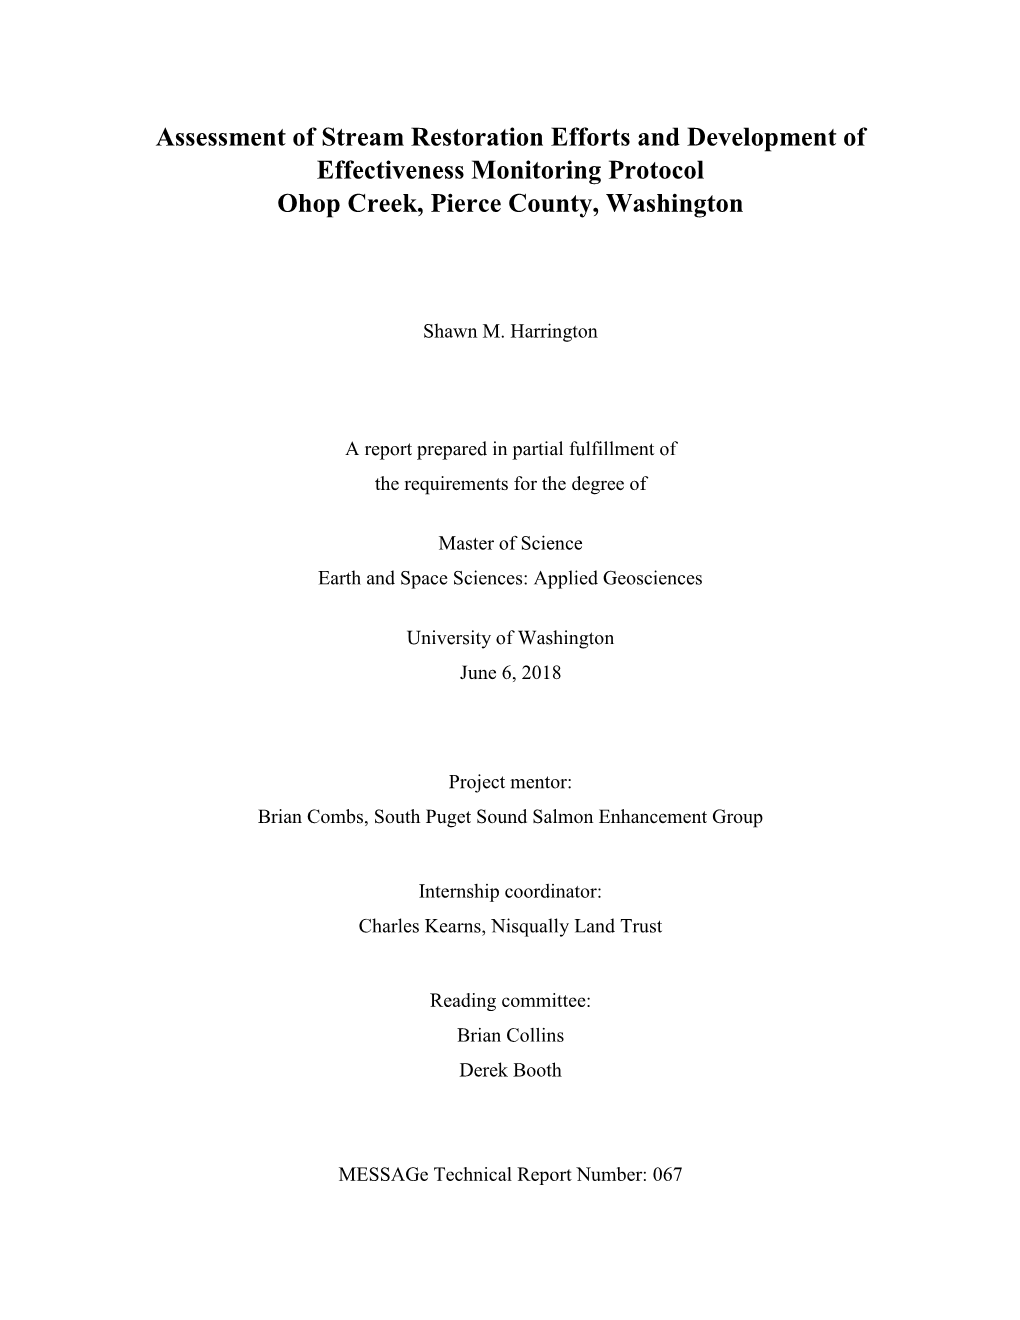 Assessment of Stream Restoration Efforts and Development of Effectiveness Monitoring Protocol Ohop Creek, Pierce County, Washington